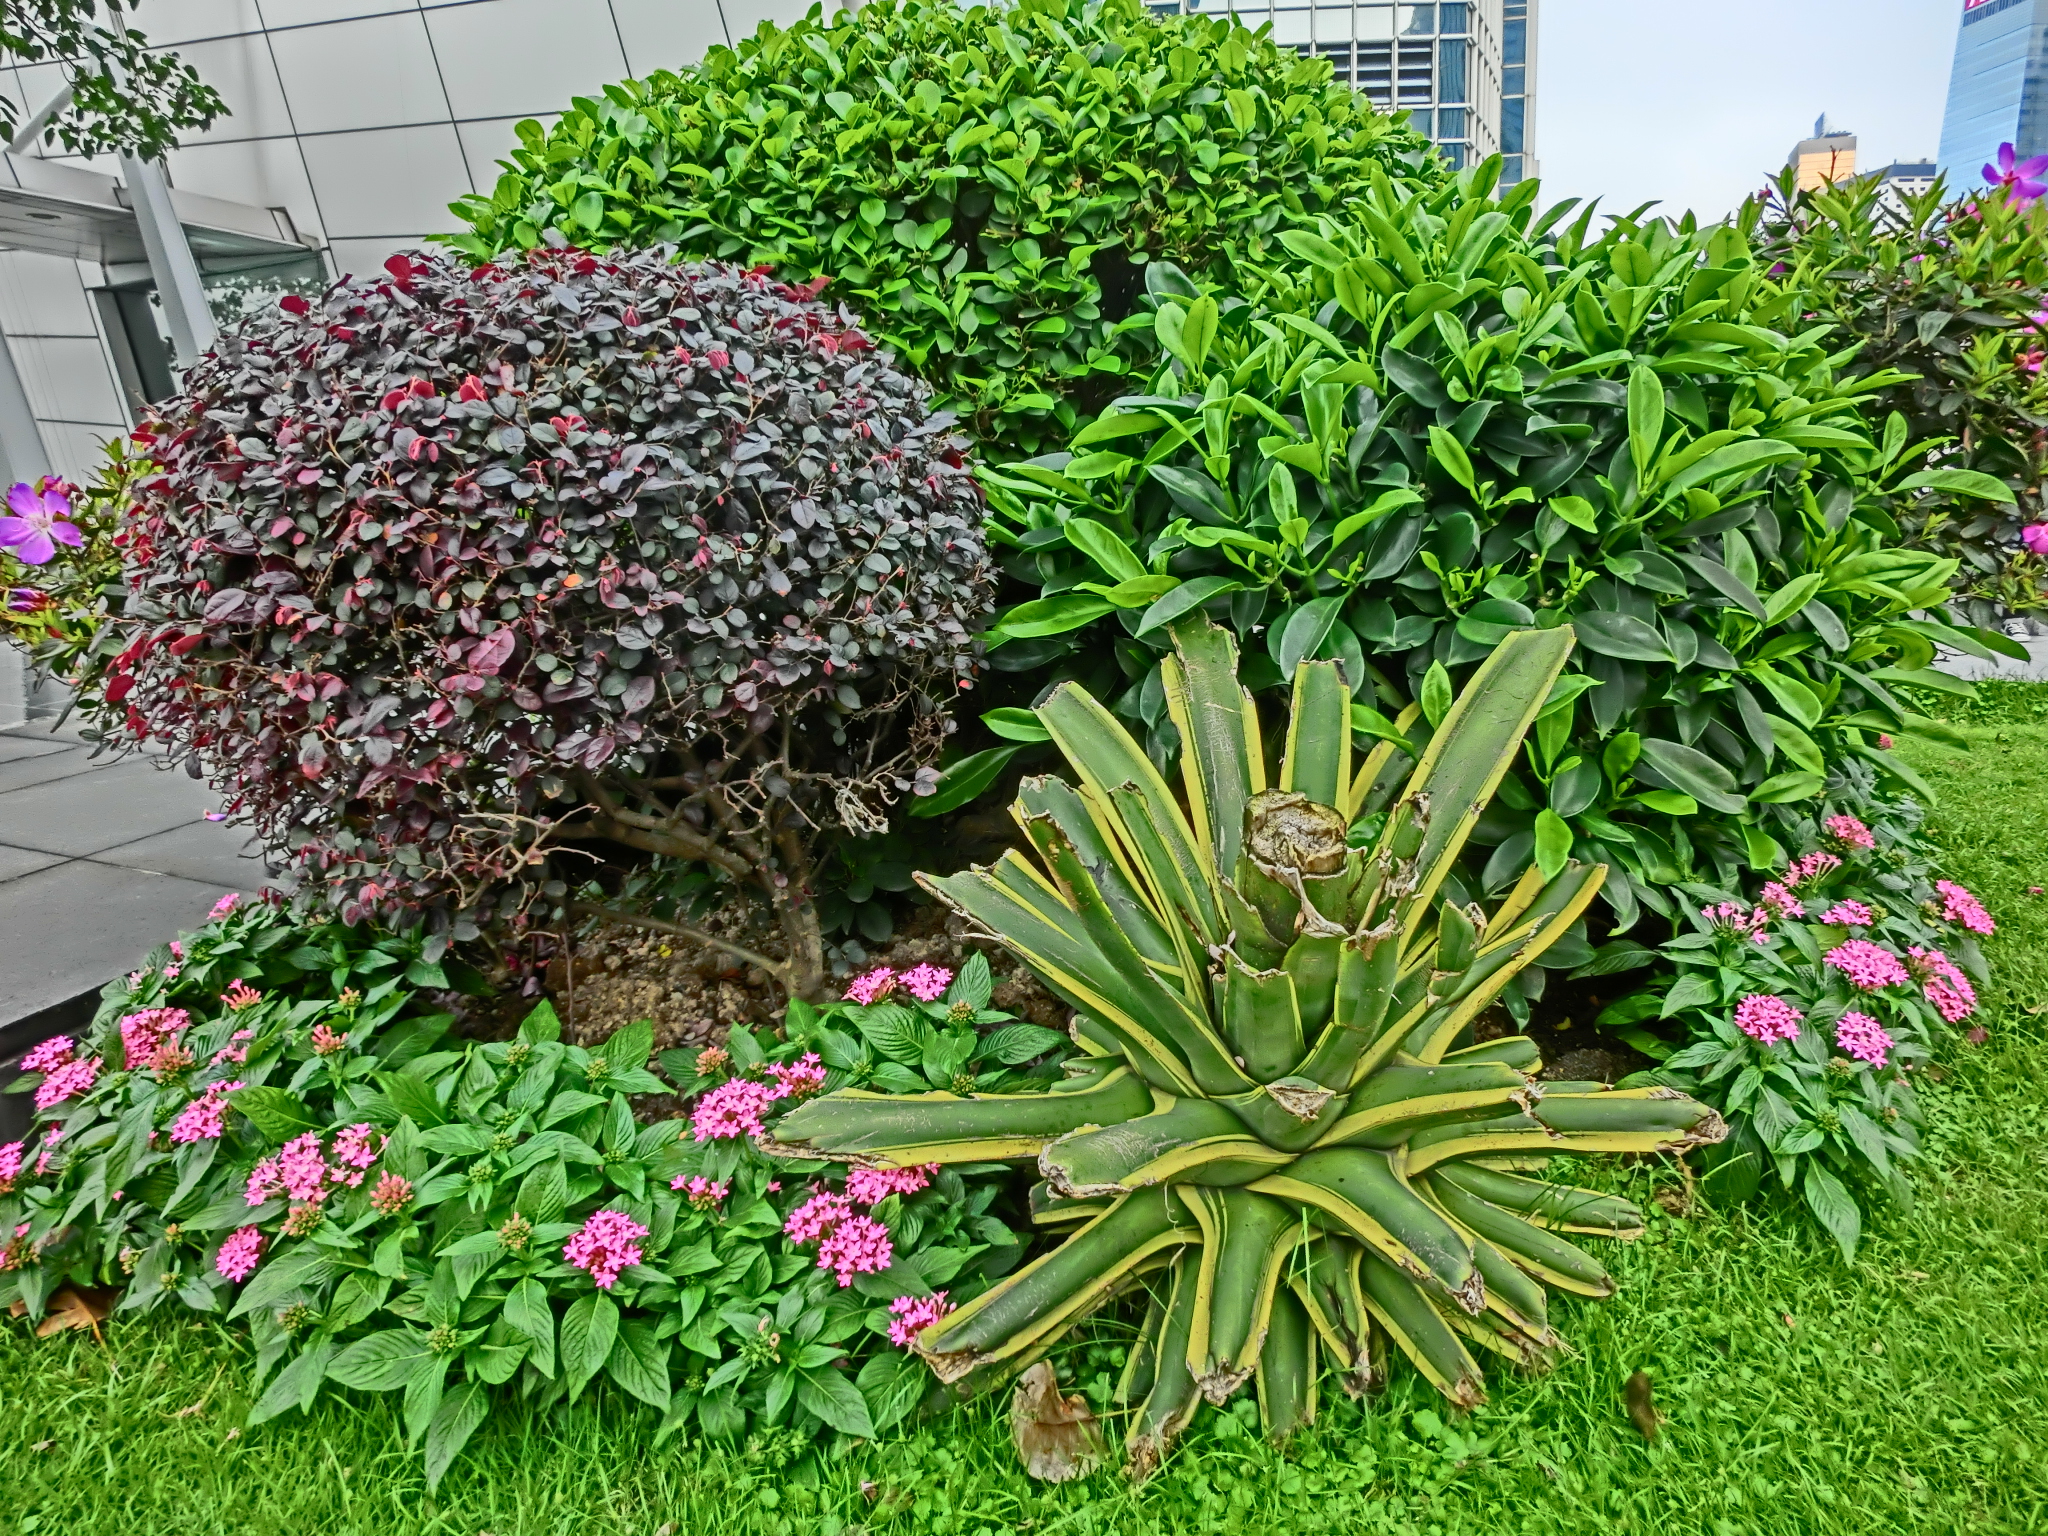 File:HK Central IFC Podium Garden green plants May-2013.JPG ...